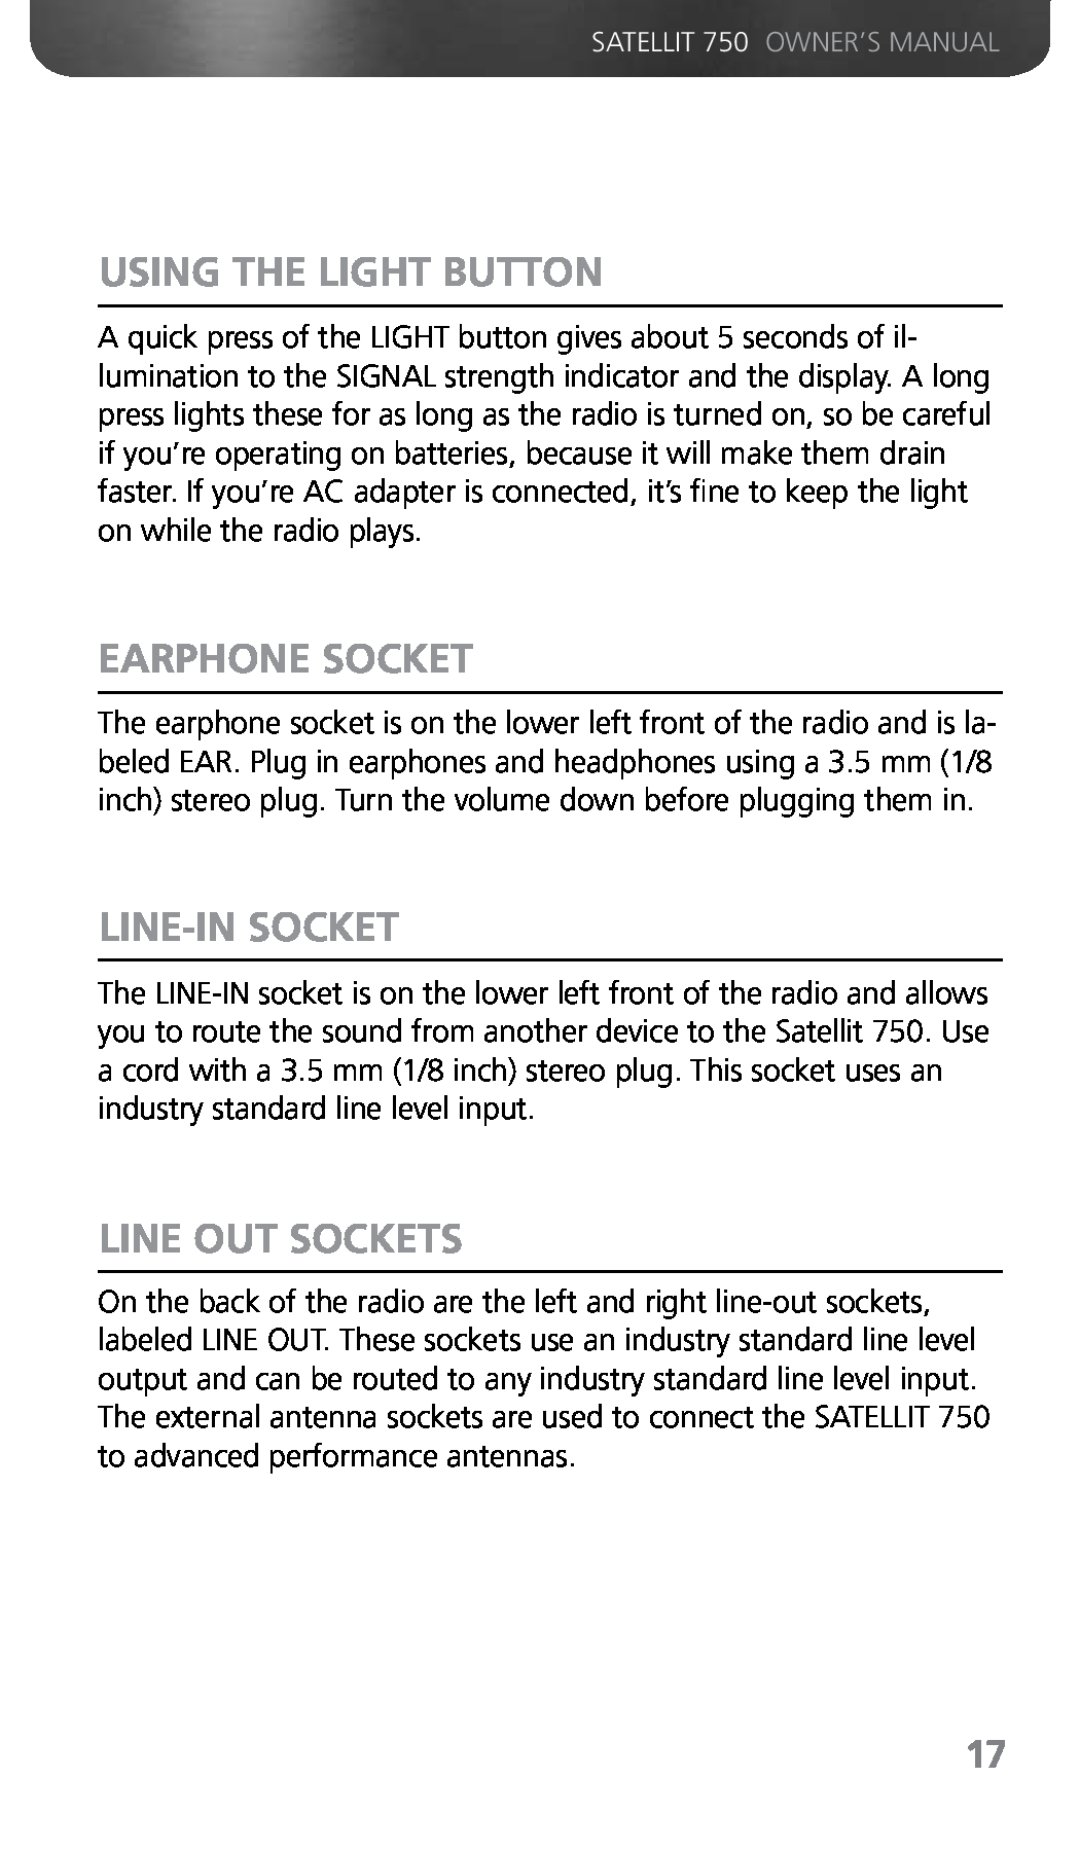 Grundig 750 owner manual Using The Light Button, Earphone Socket, Line-Insocket, Line Out Sockets 